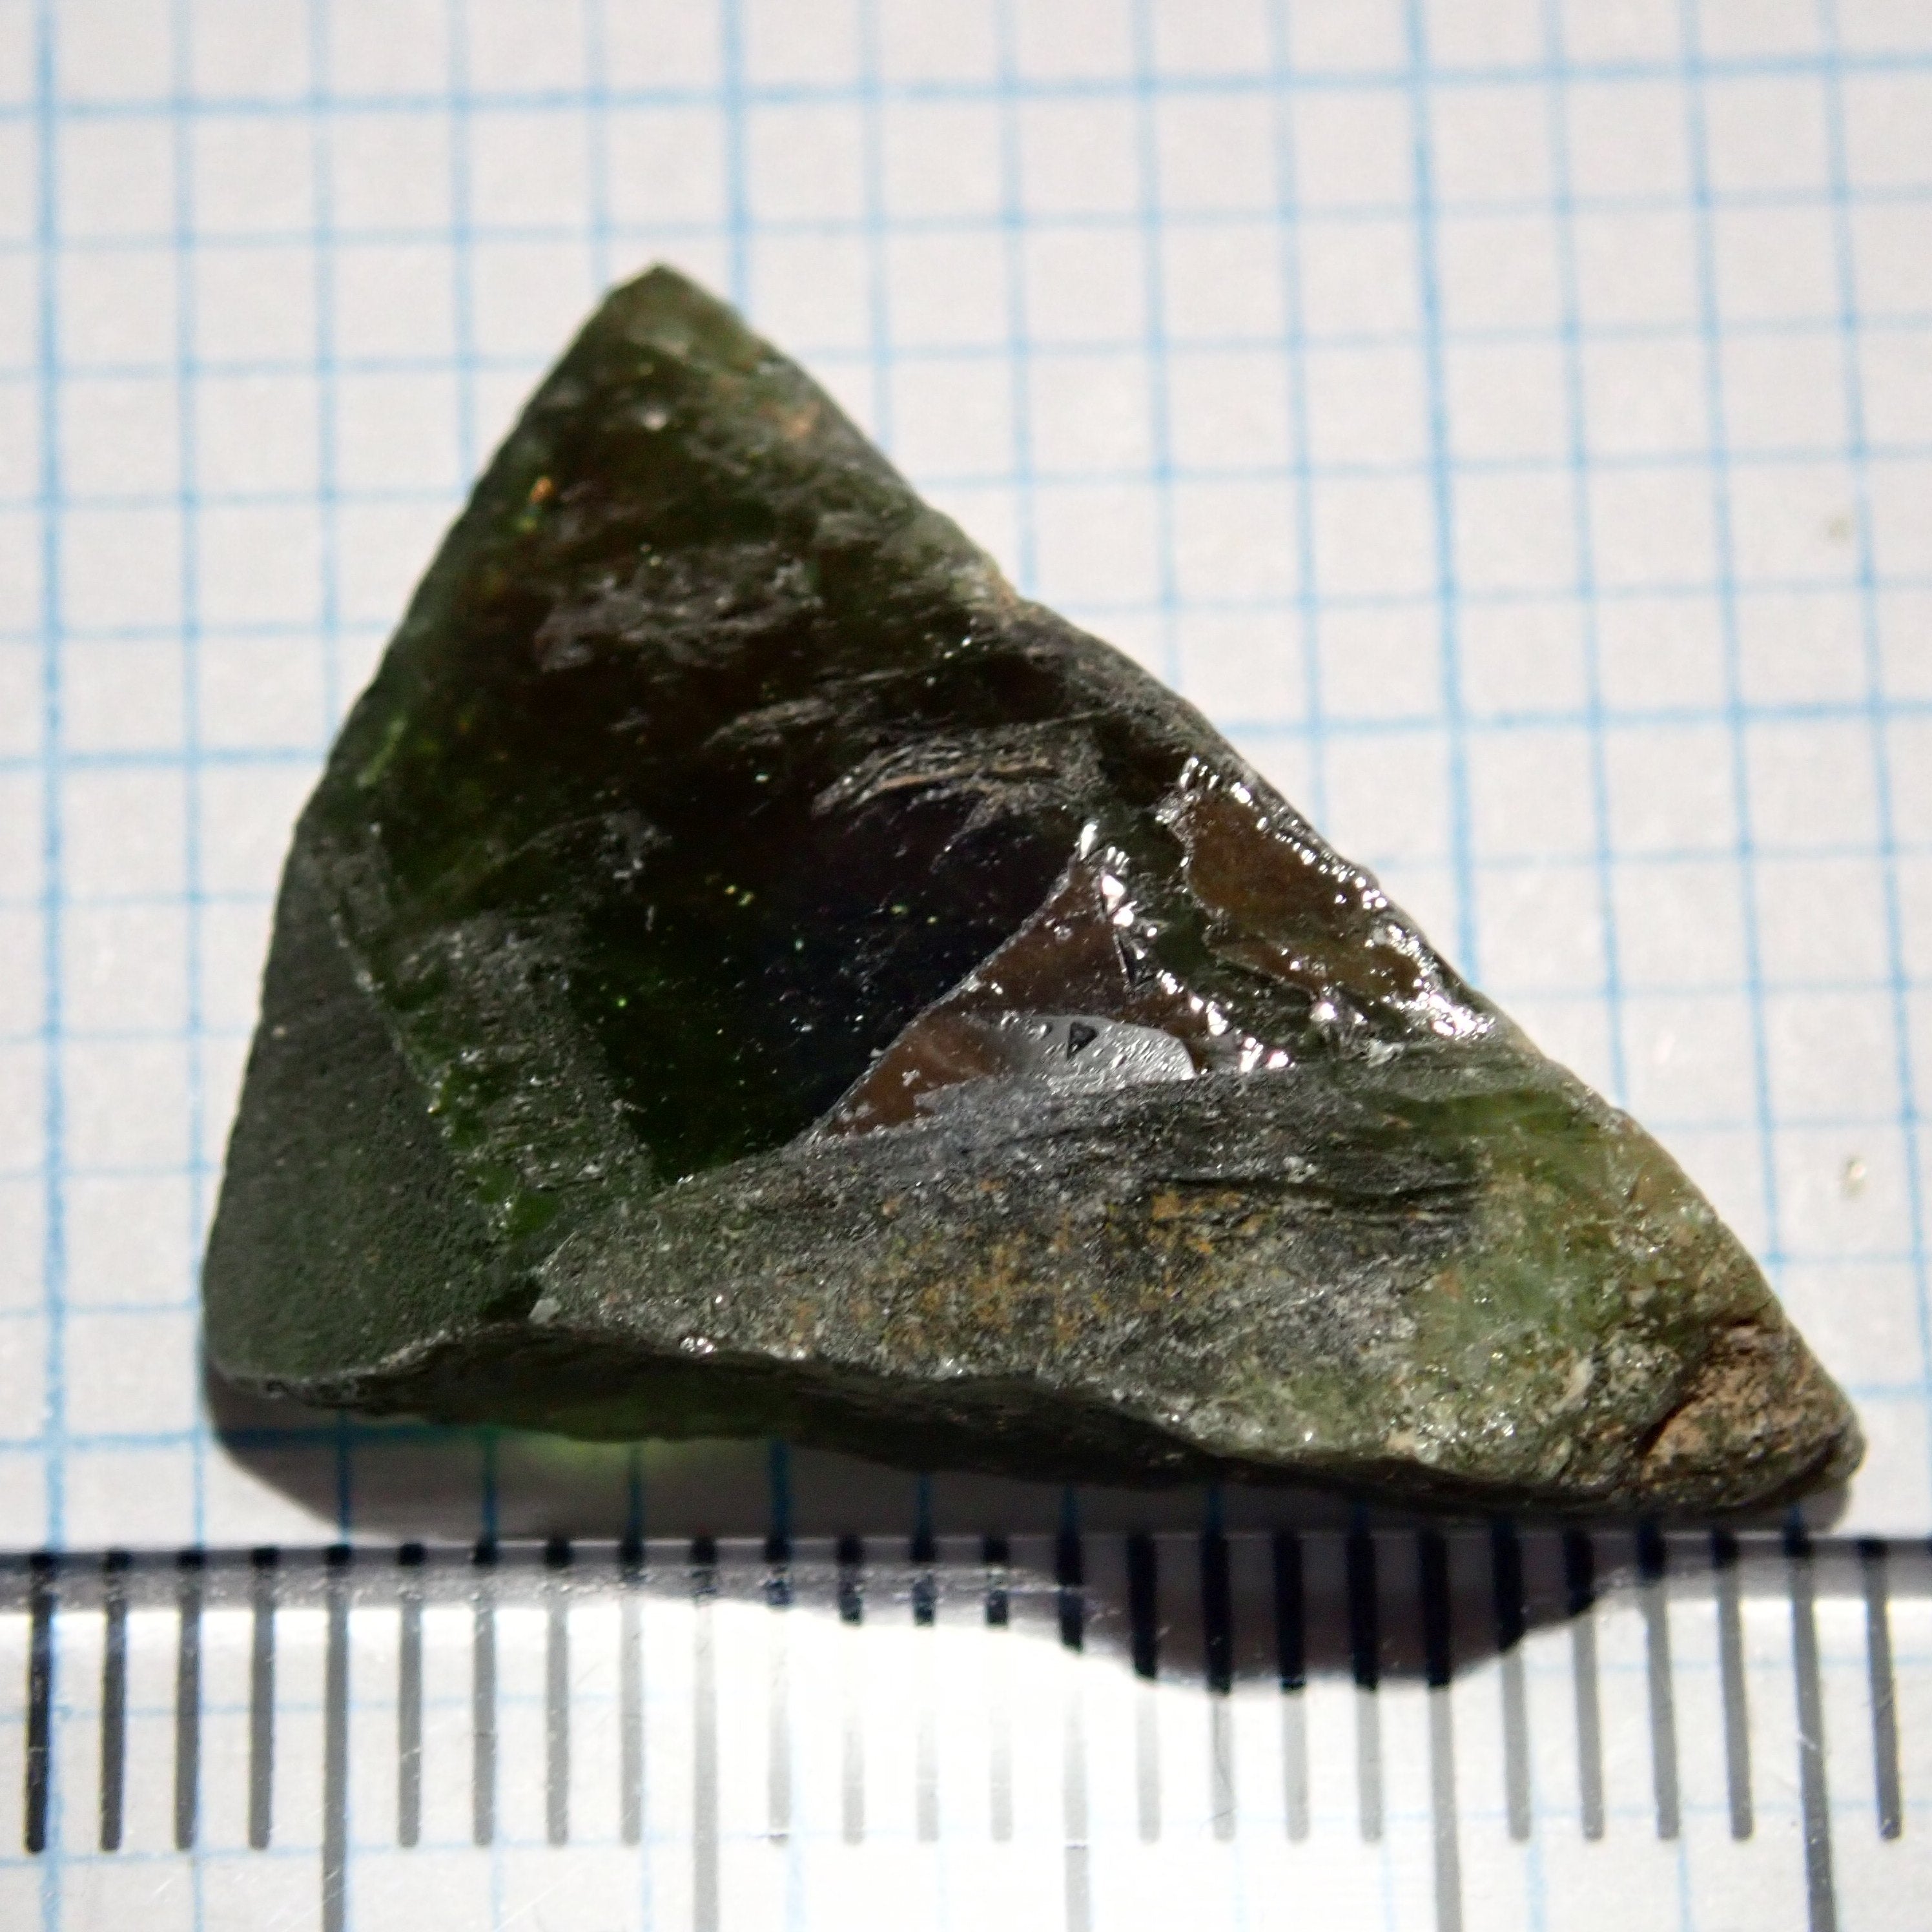 19.92Ct Chrome Sphene Crystal Tanzania Very Rare